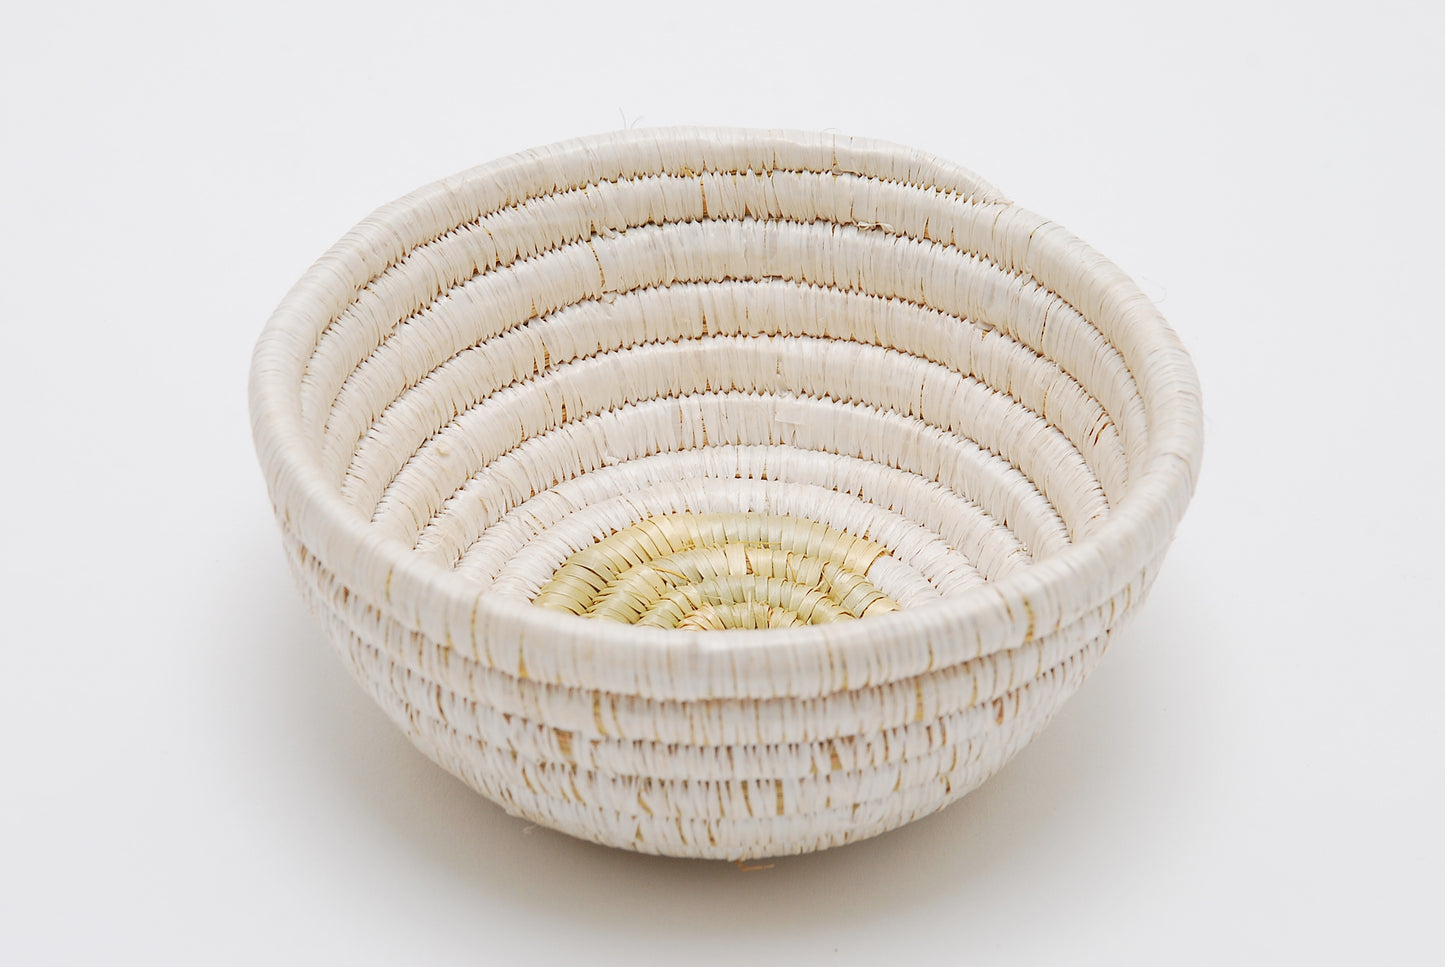 Bakuli woven bowls